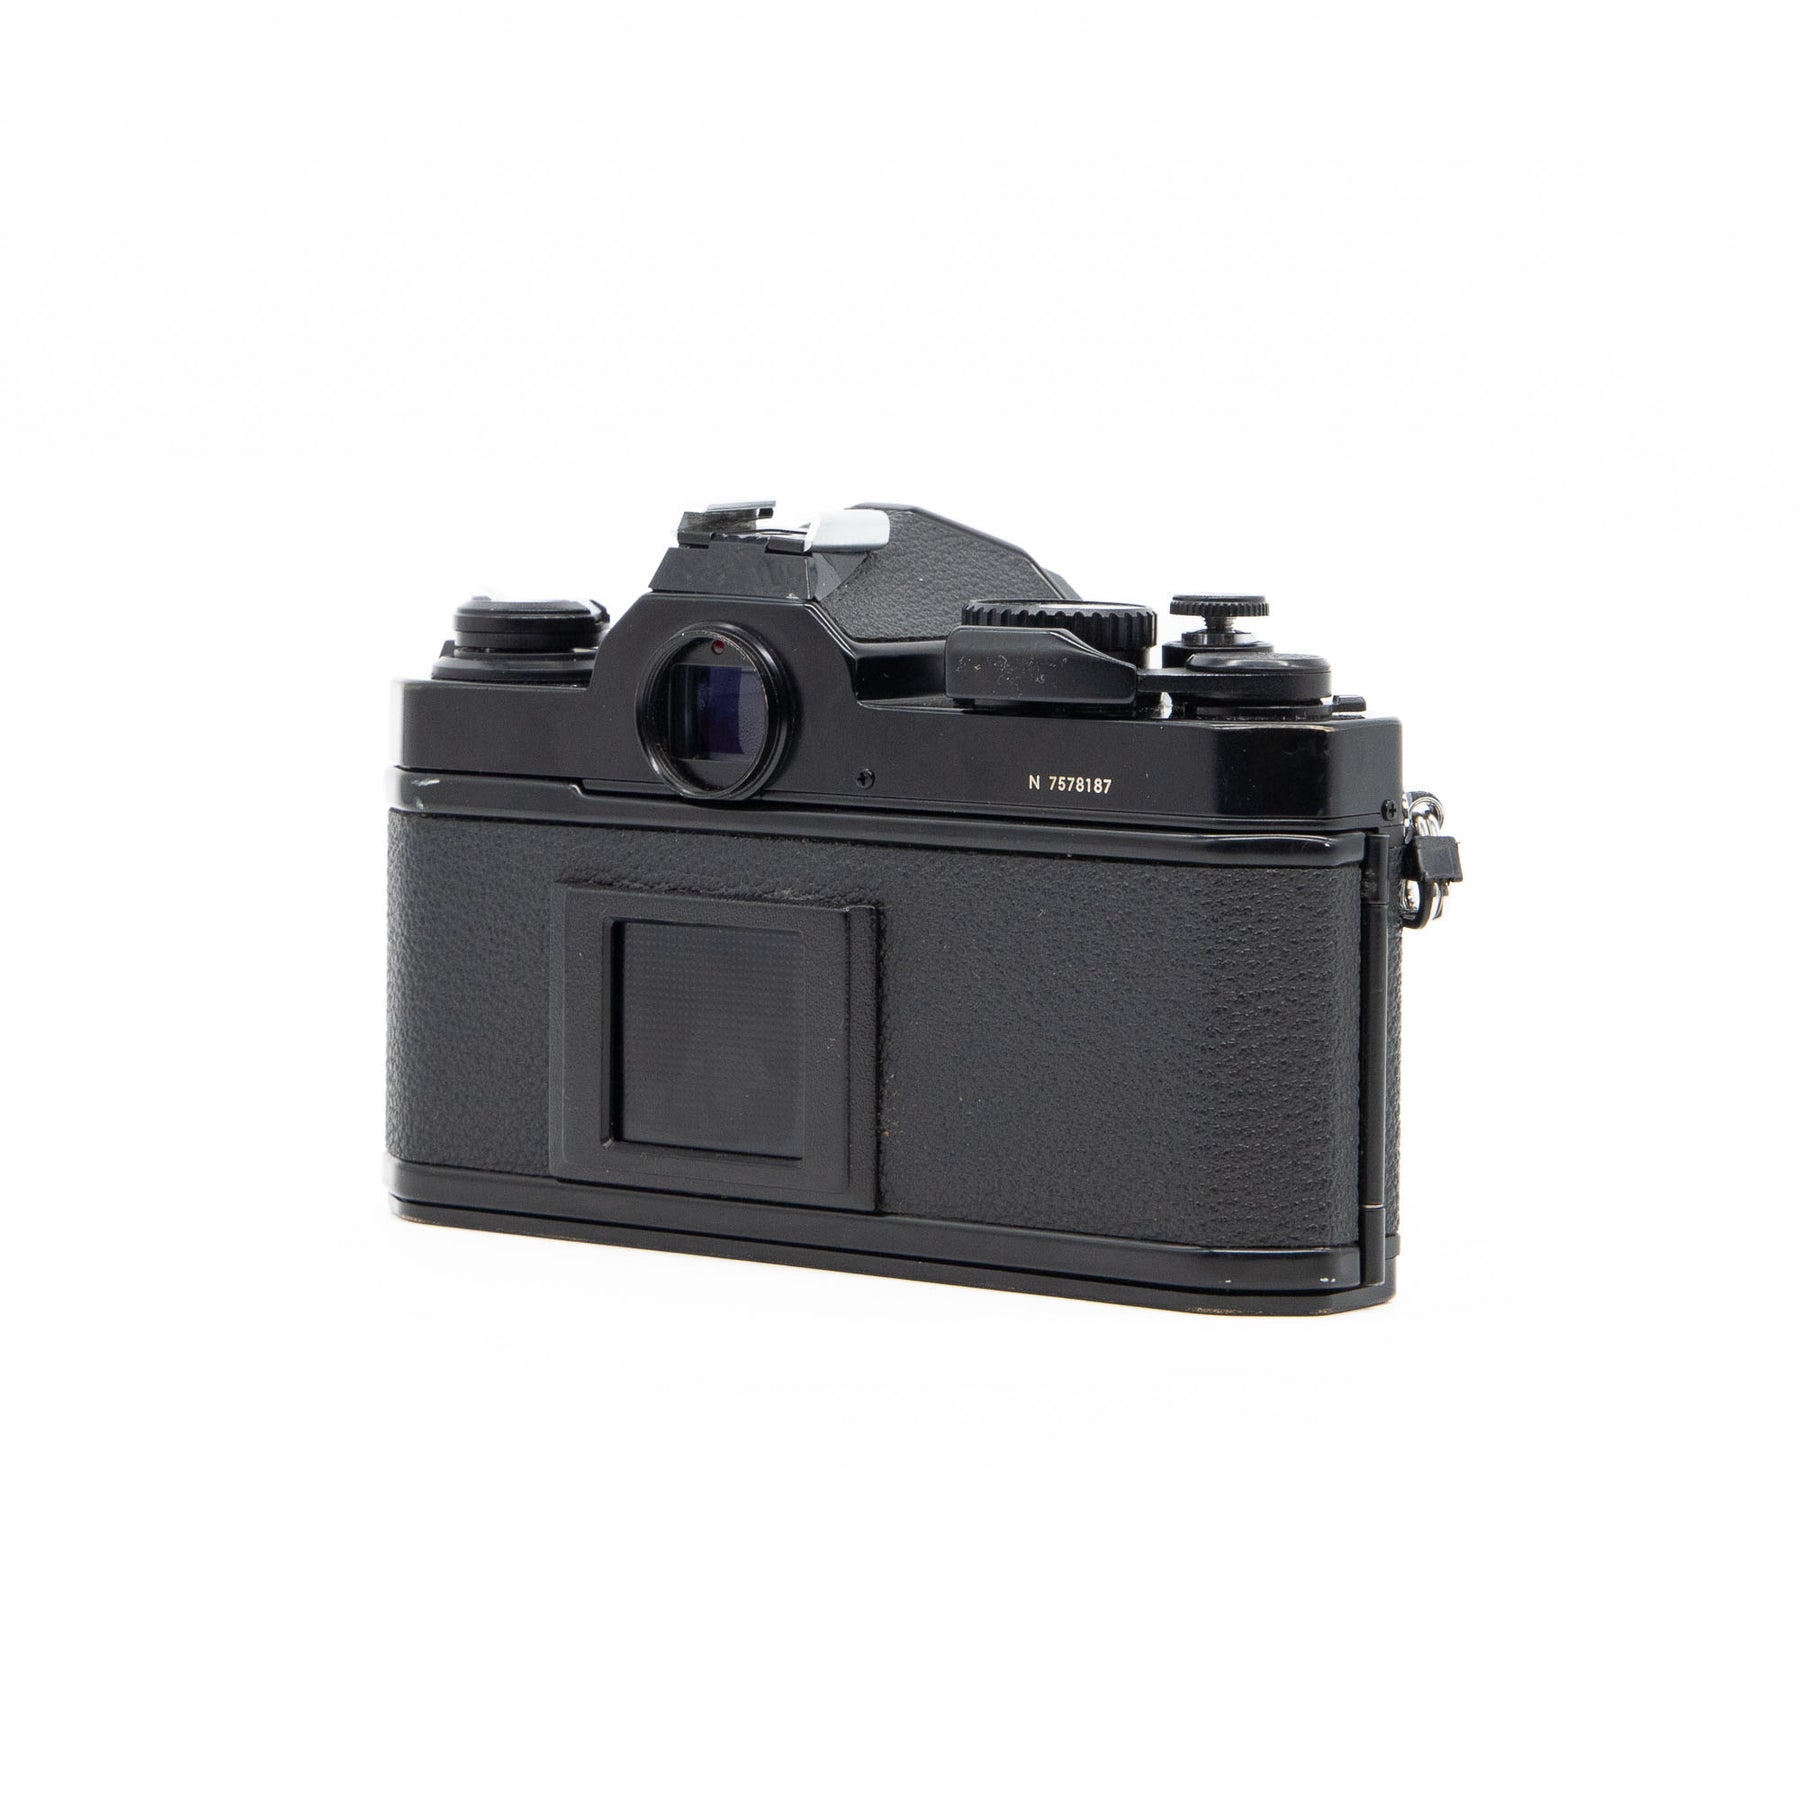 Nikon FM2 & Nikkor 50mm f/1.4